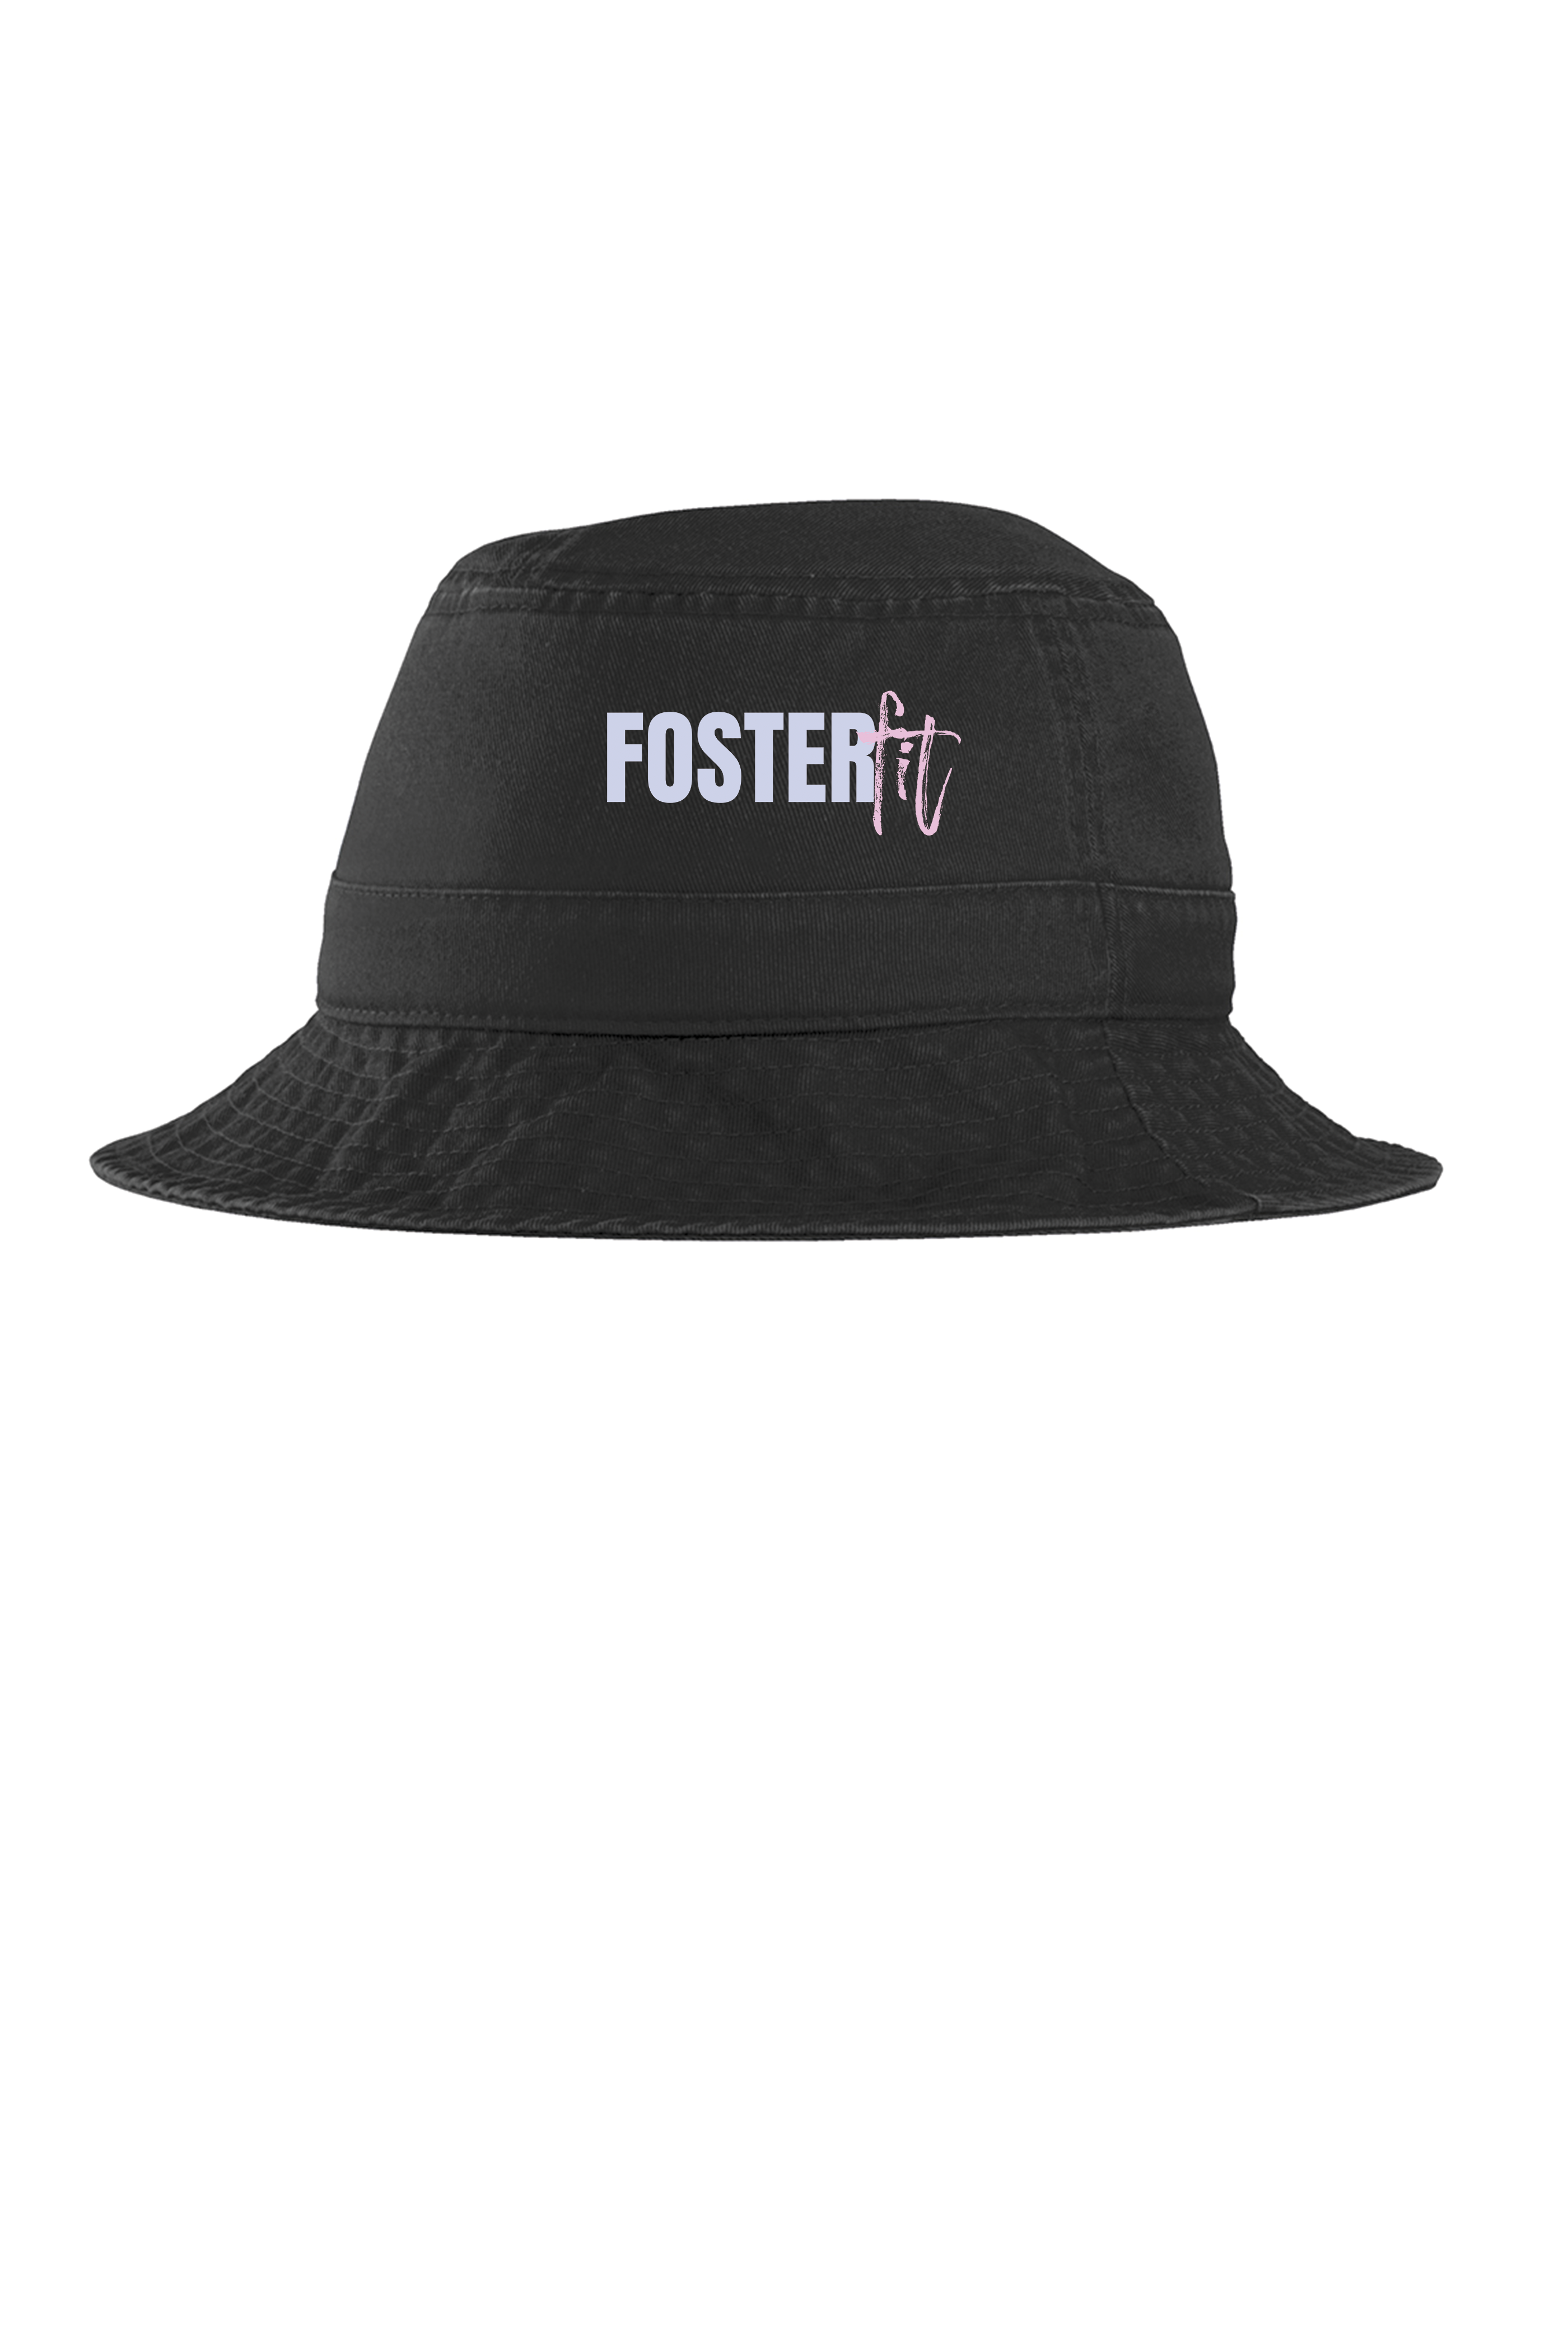 Foster Fit Bucket Hat